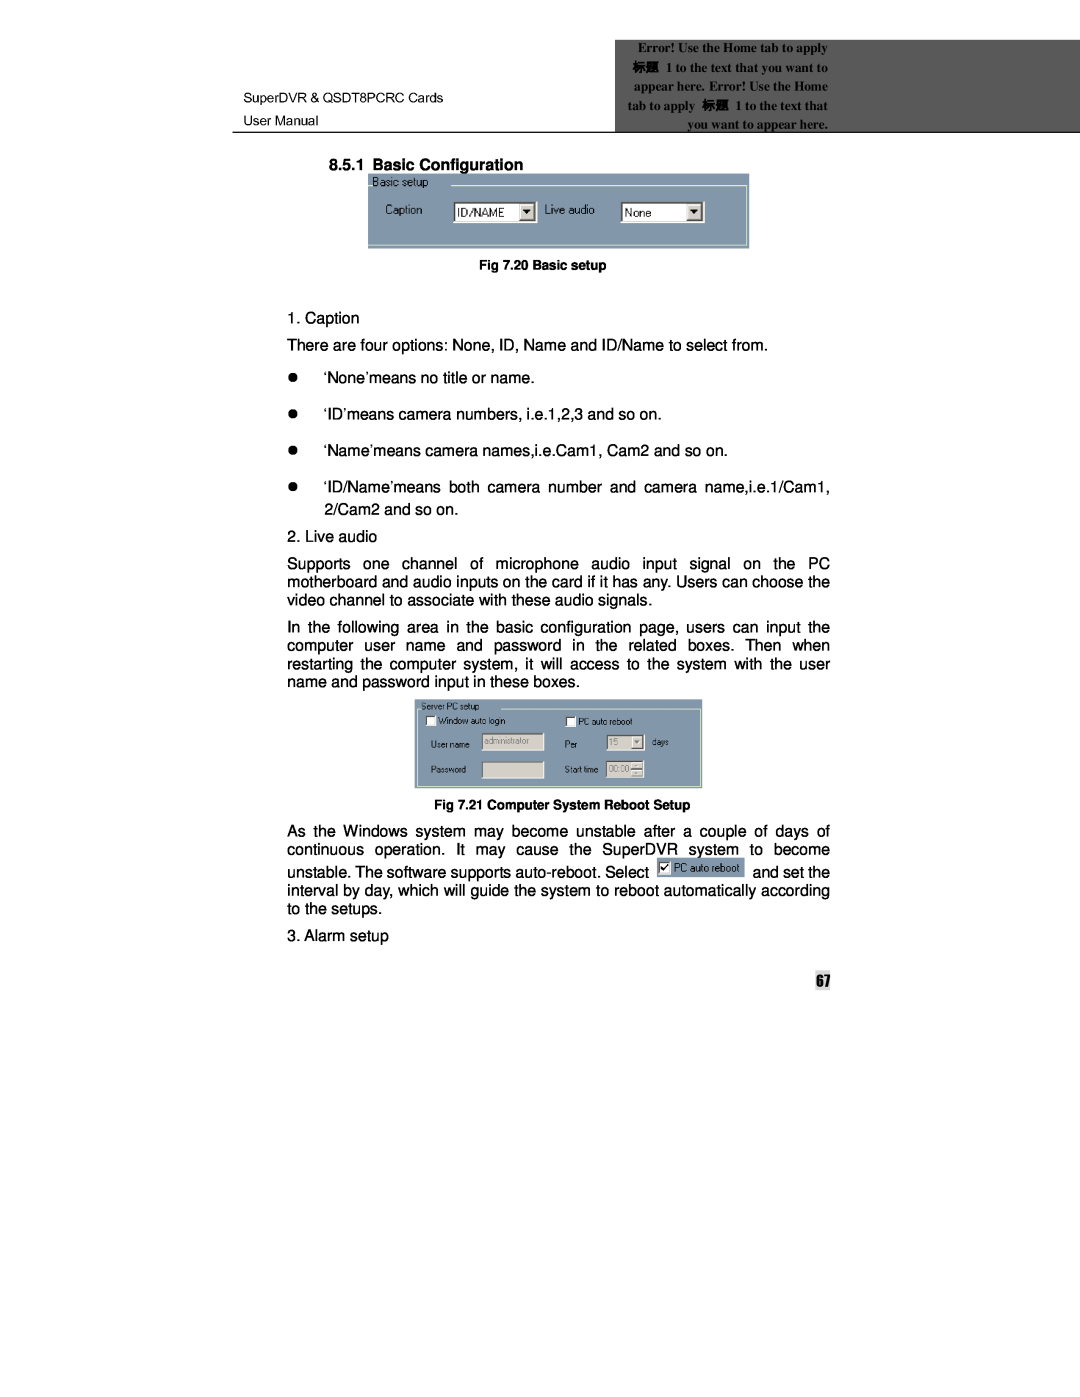 Q-See manual SuperDVR & QSDT8PCRC Cards, User Manual, Basic Configuration, Caption 